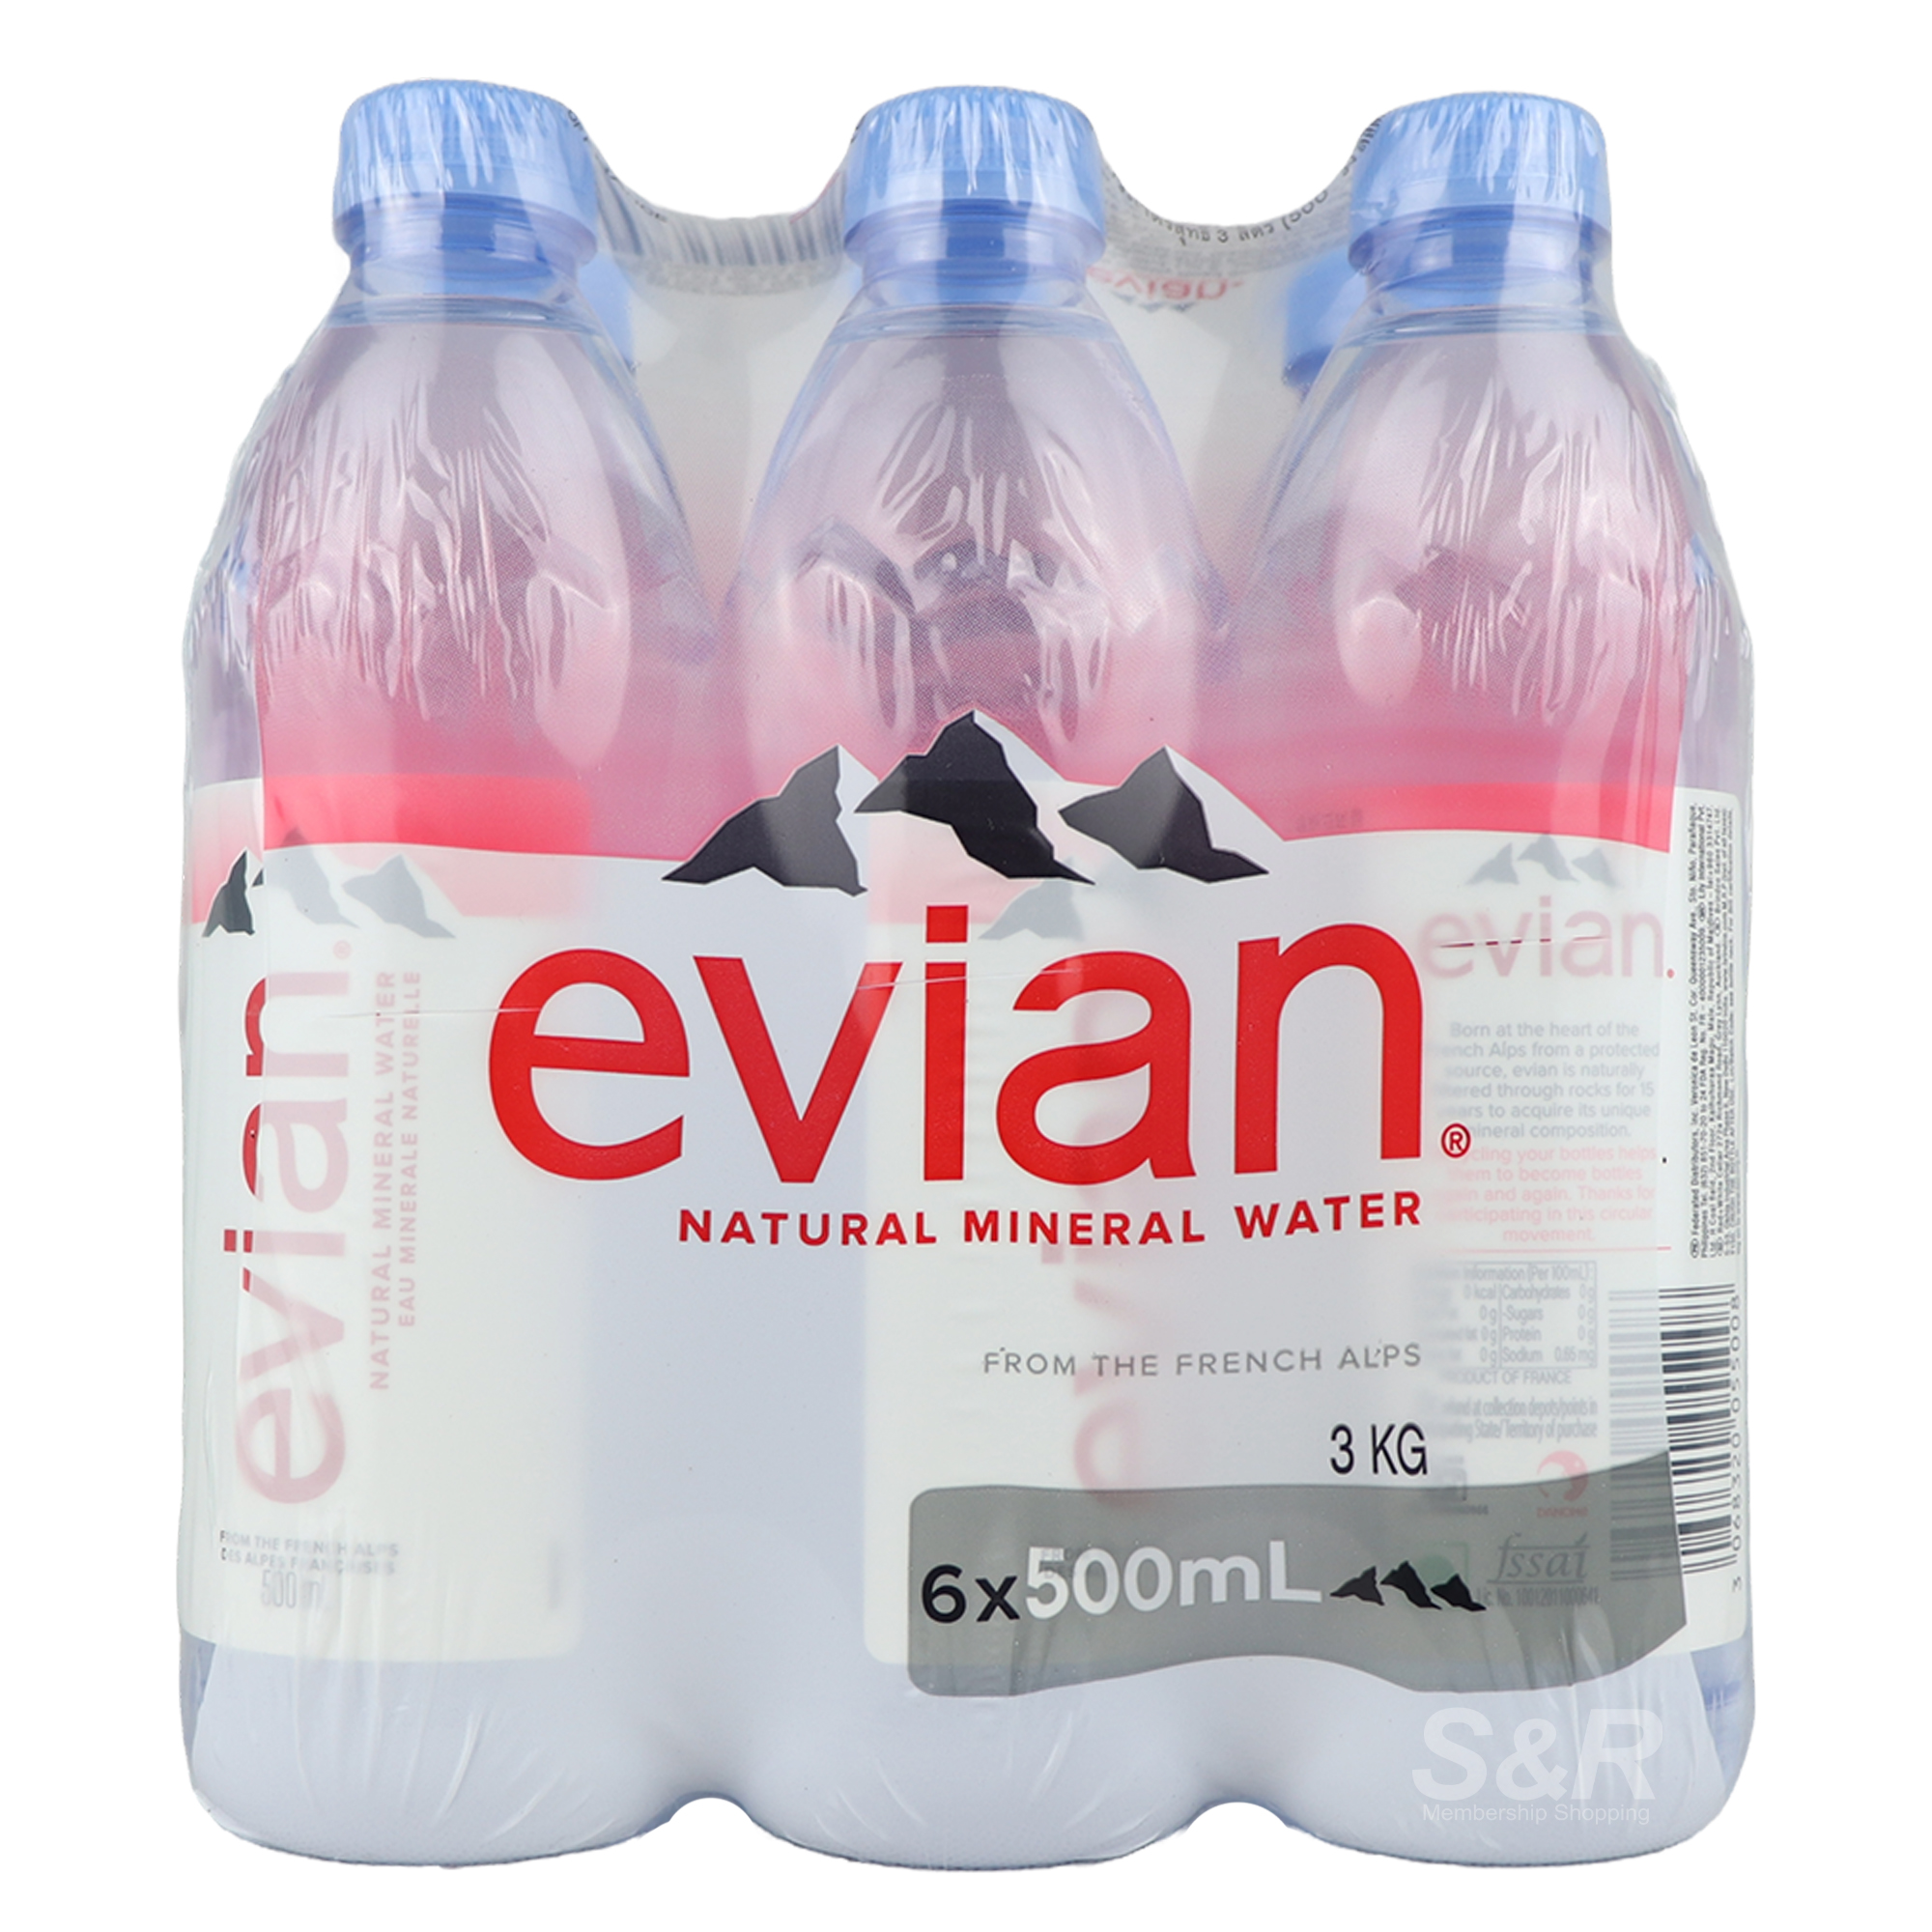 Evian Natural Mineral Water 6x500mL